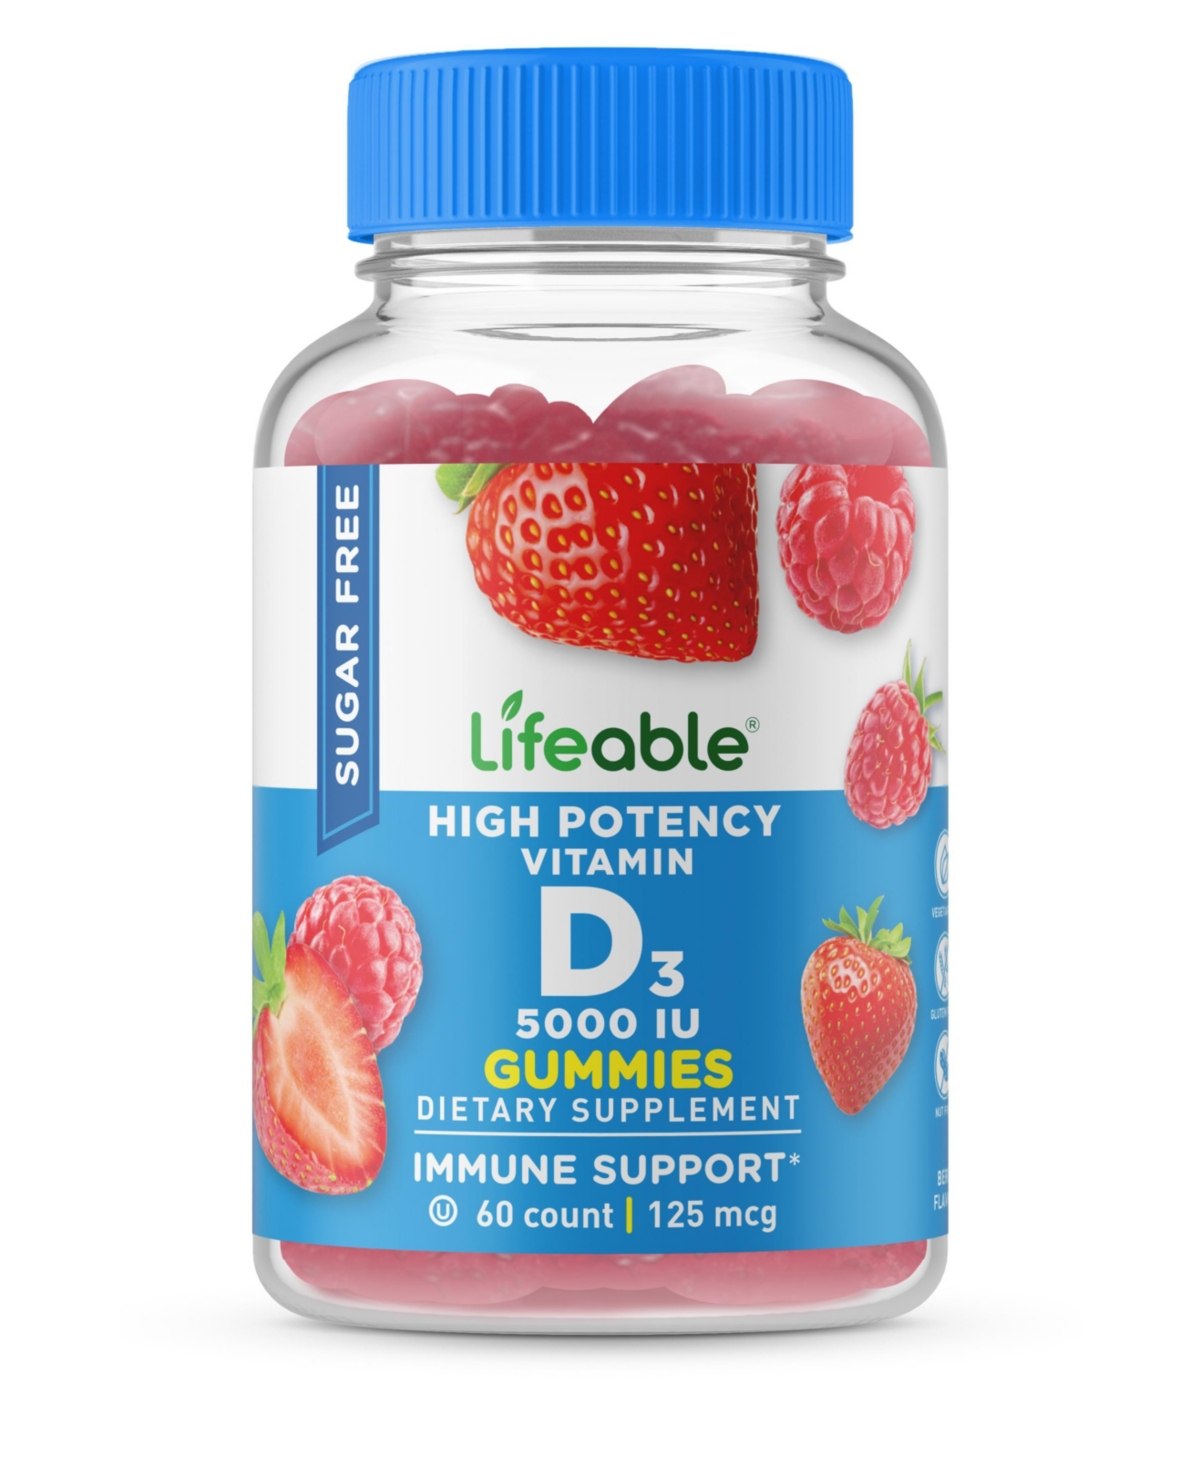 Sugar Free Vitamin D 5,000 Iu Gummies - Bone Health And Immunity - Great Tasting Natural Flavor, Dietary Supplement Vitamins - 60 Gummies - O